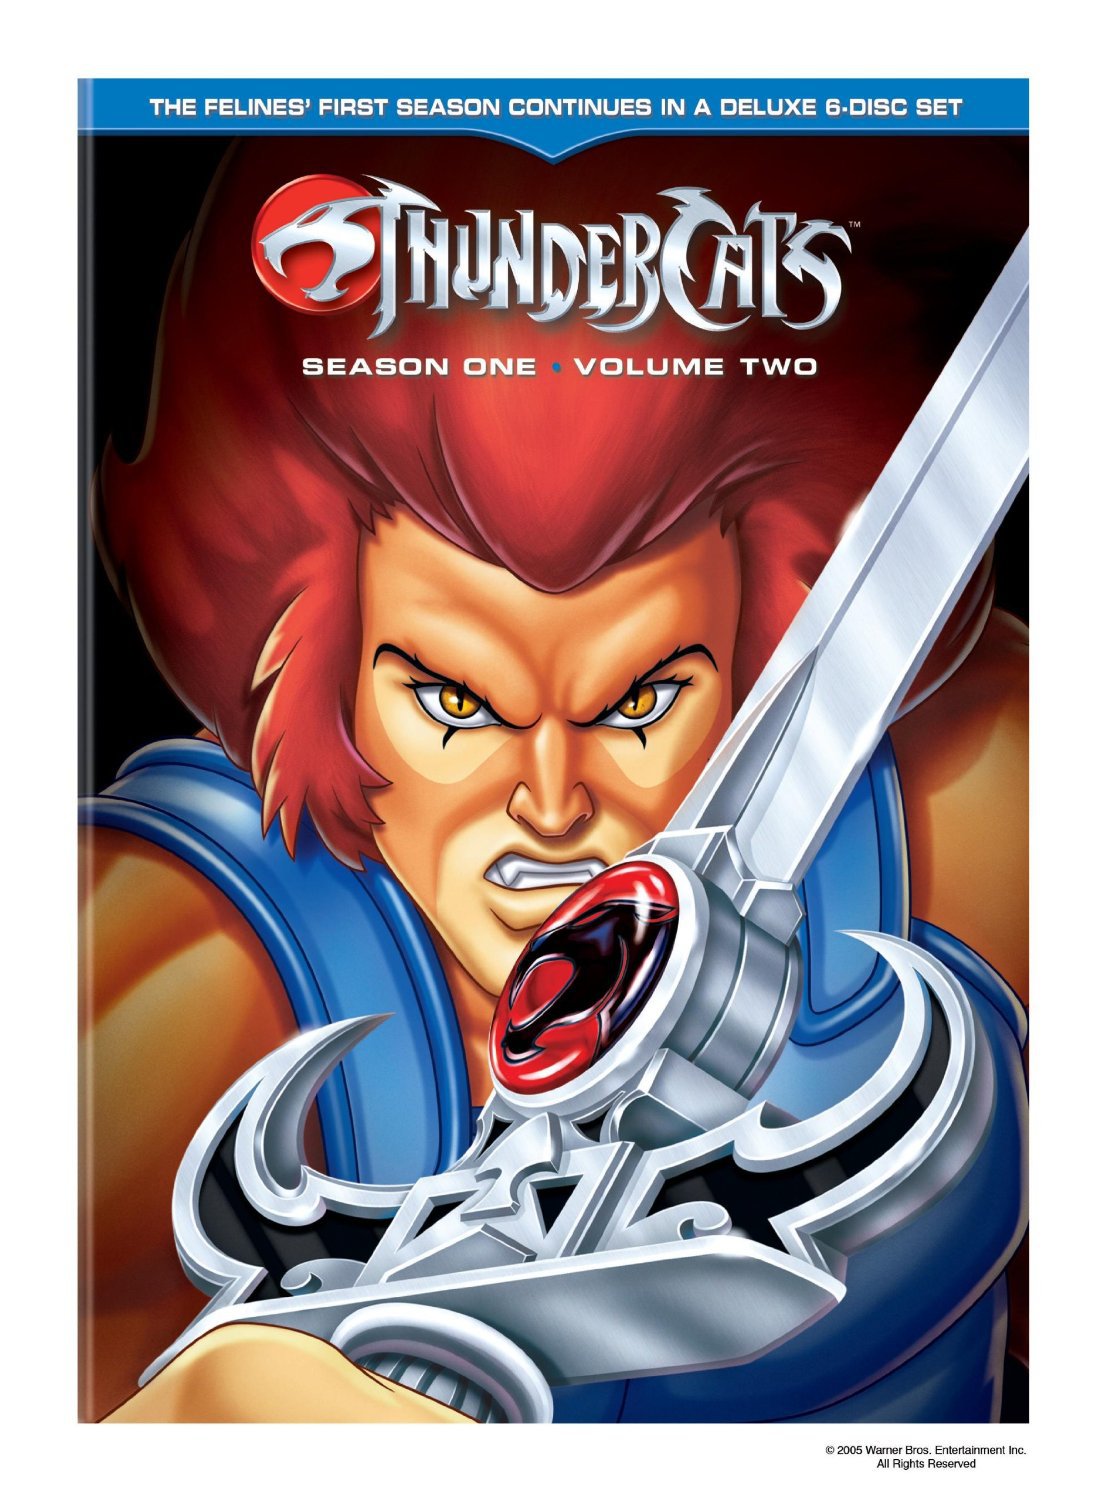 Thundercats: Season 1 Vol 2